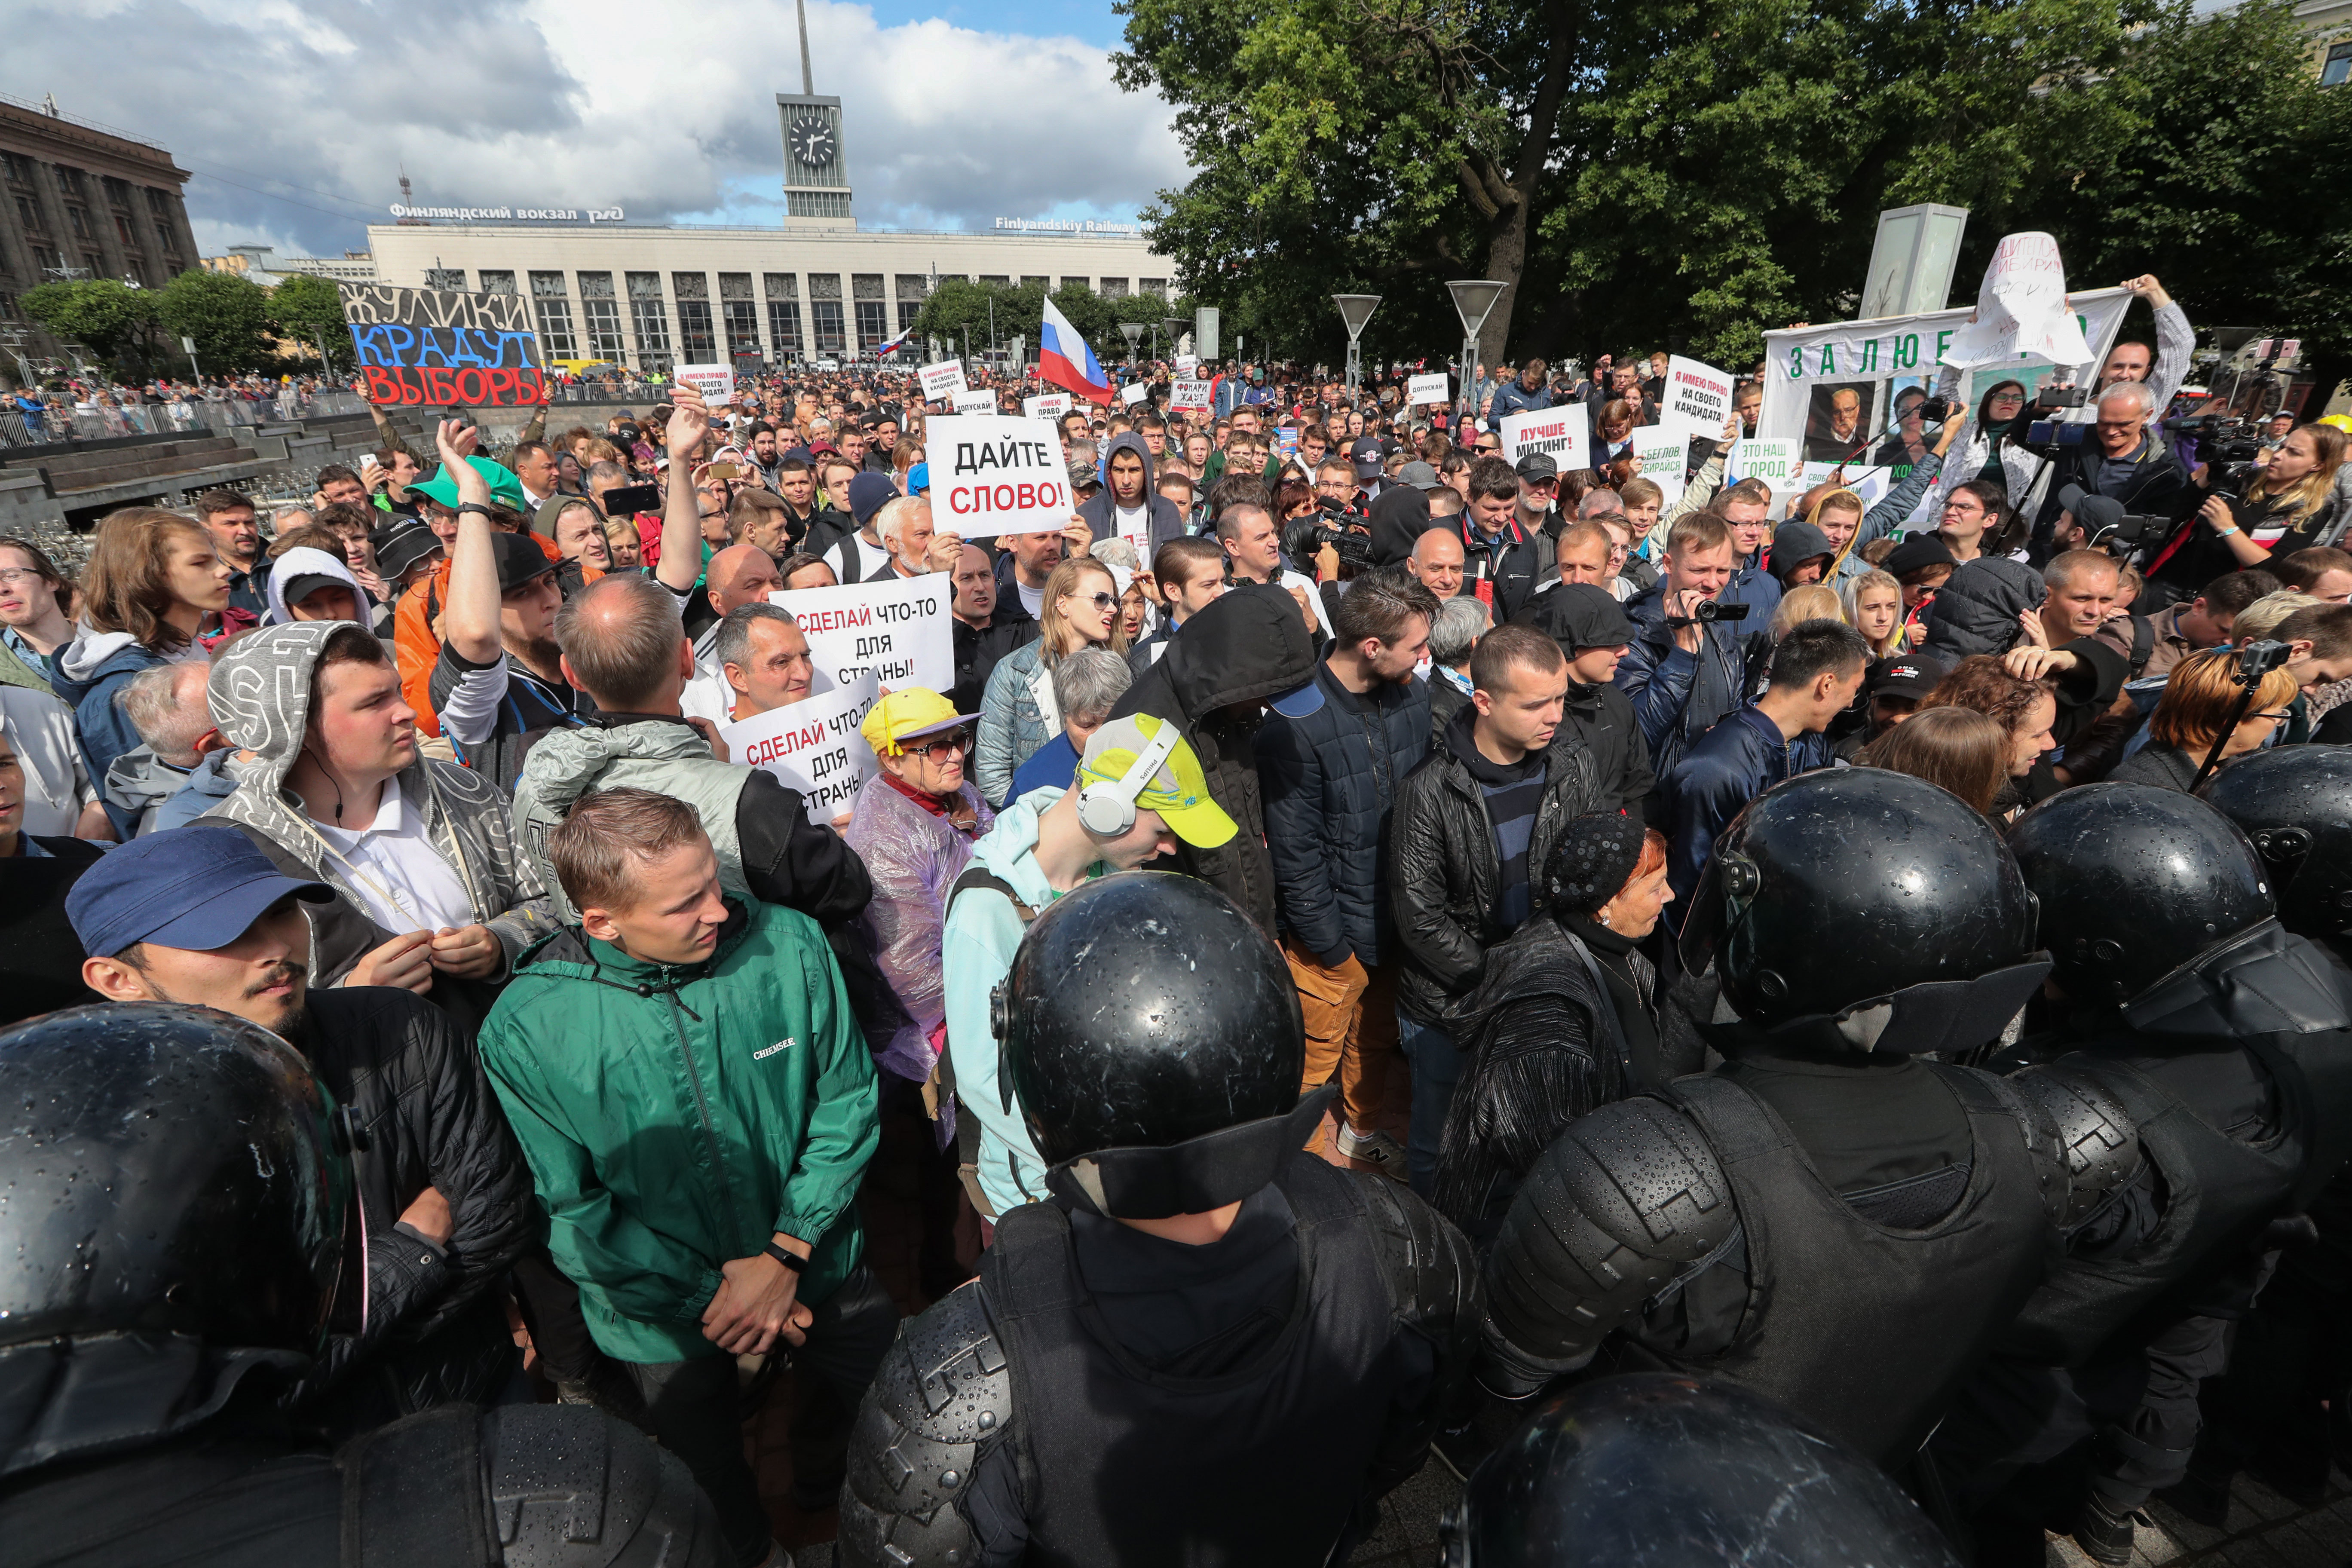 C митинг. Митинг. Фоторепортаж митинг. Митингующие в Москве. Митинг в Питере 2019.